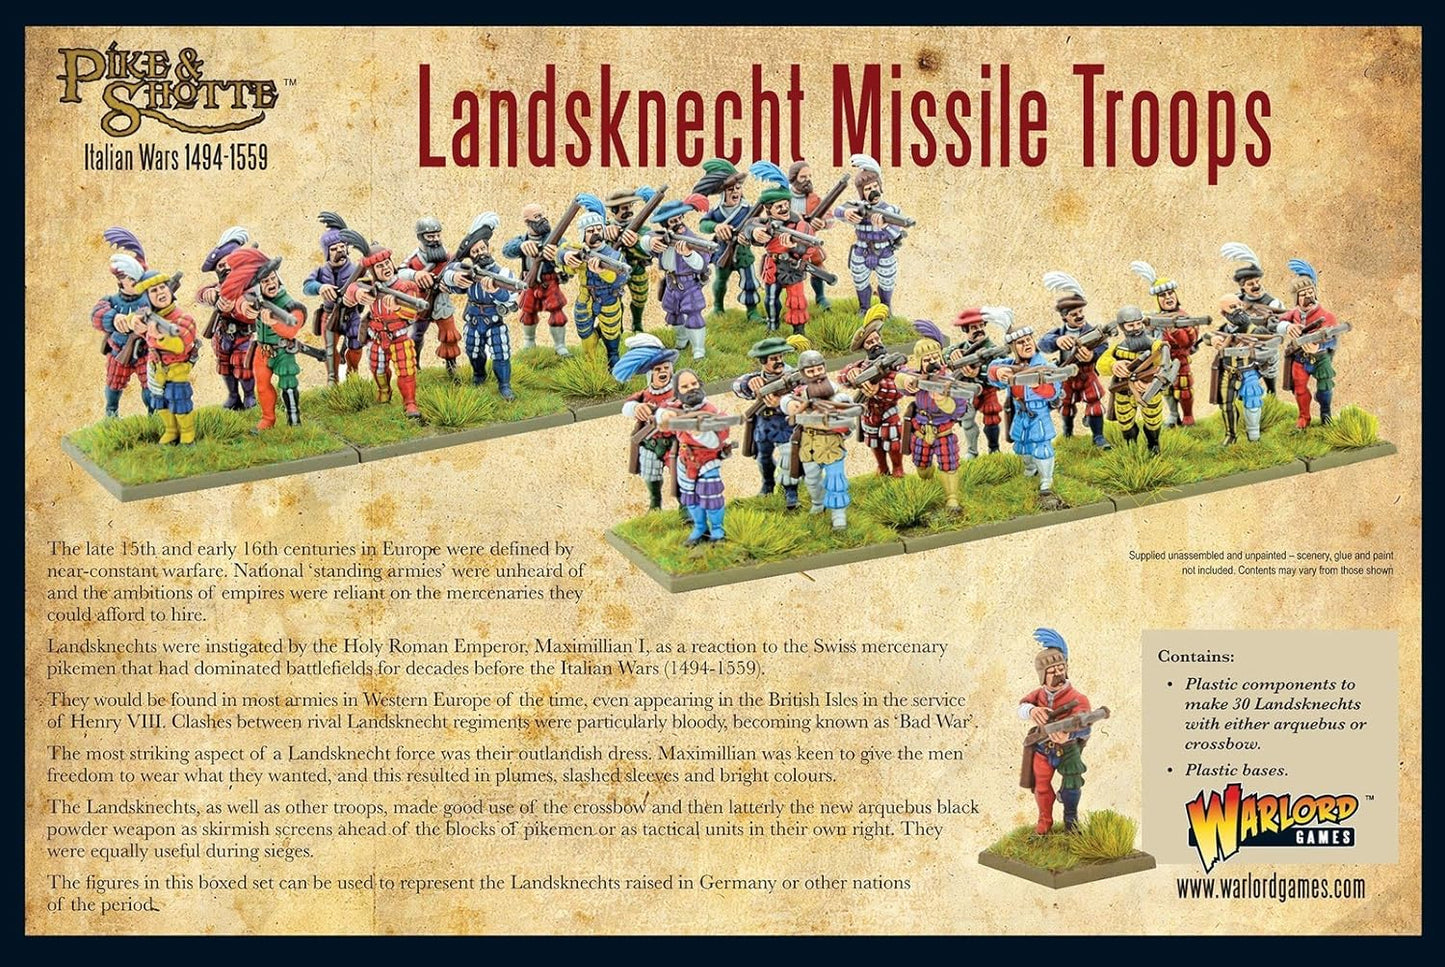 Warlord Games, Pike and Shotthe - Landsknecht missile troops, Wargaming Miniatures #202016003